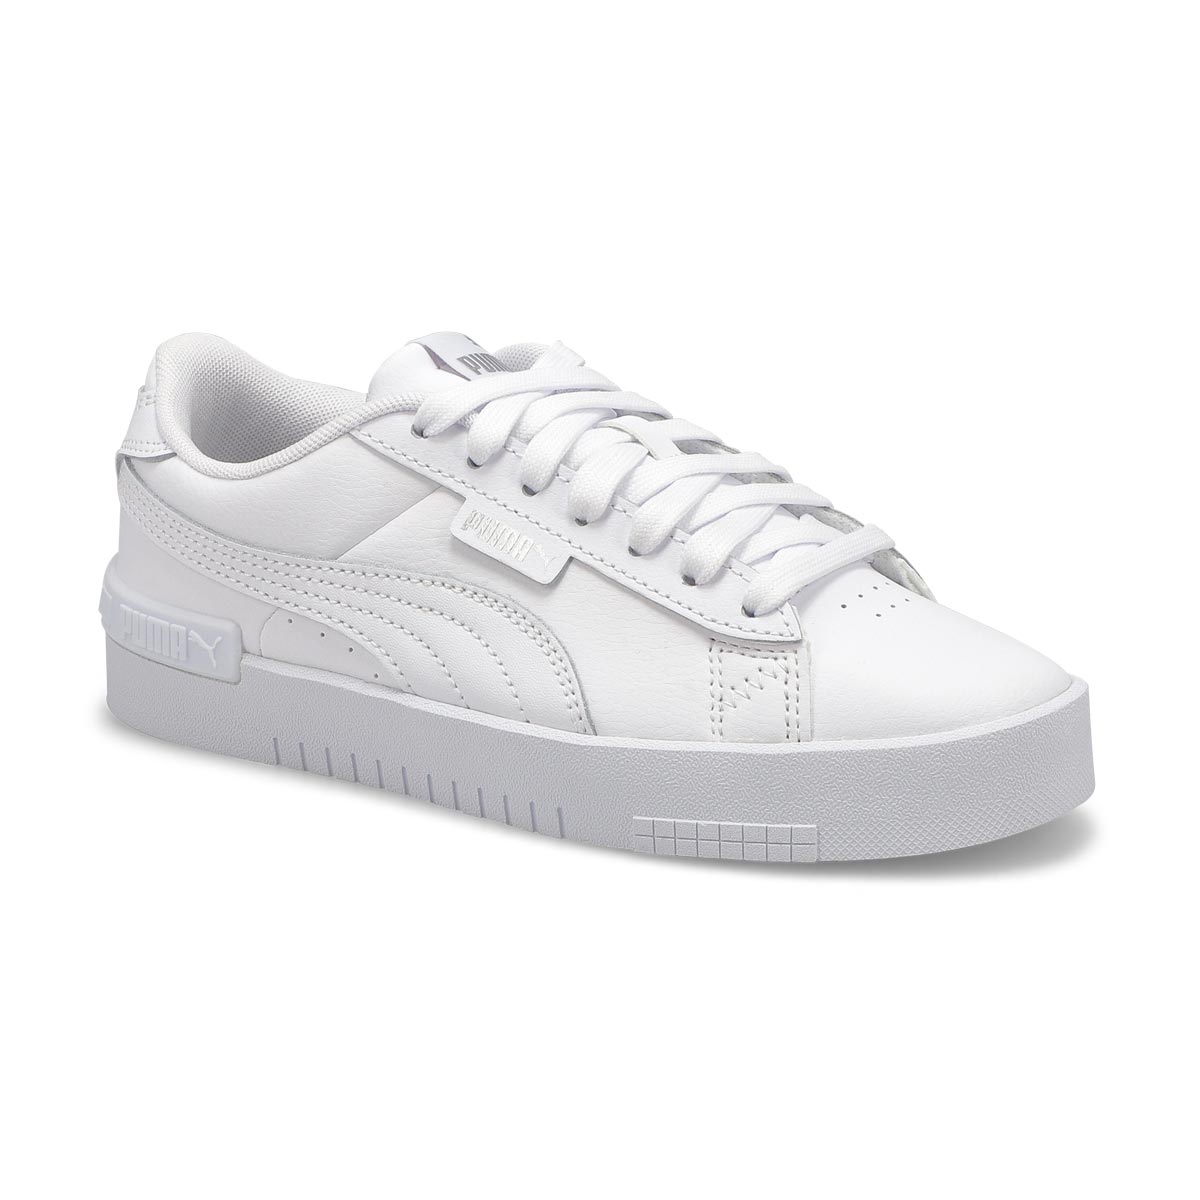 Girls' Puma Jada Jr Sneaker - White/Silver